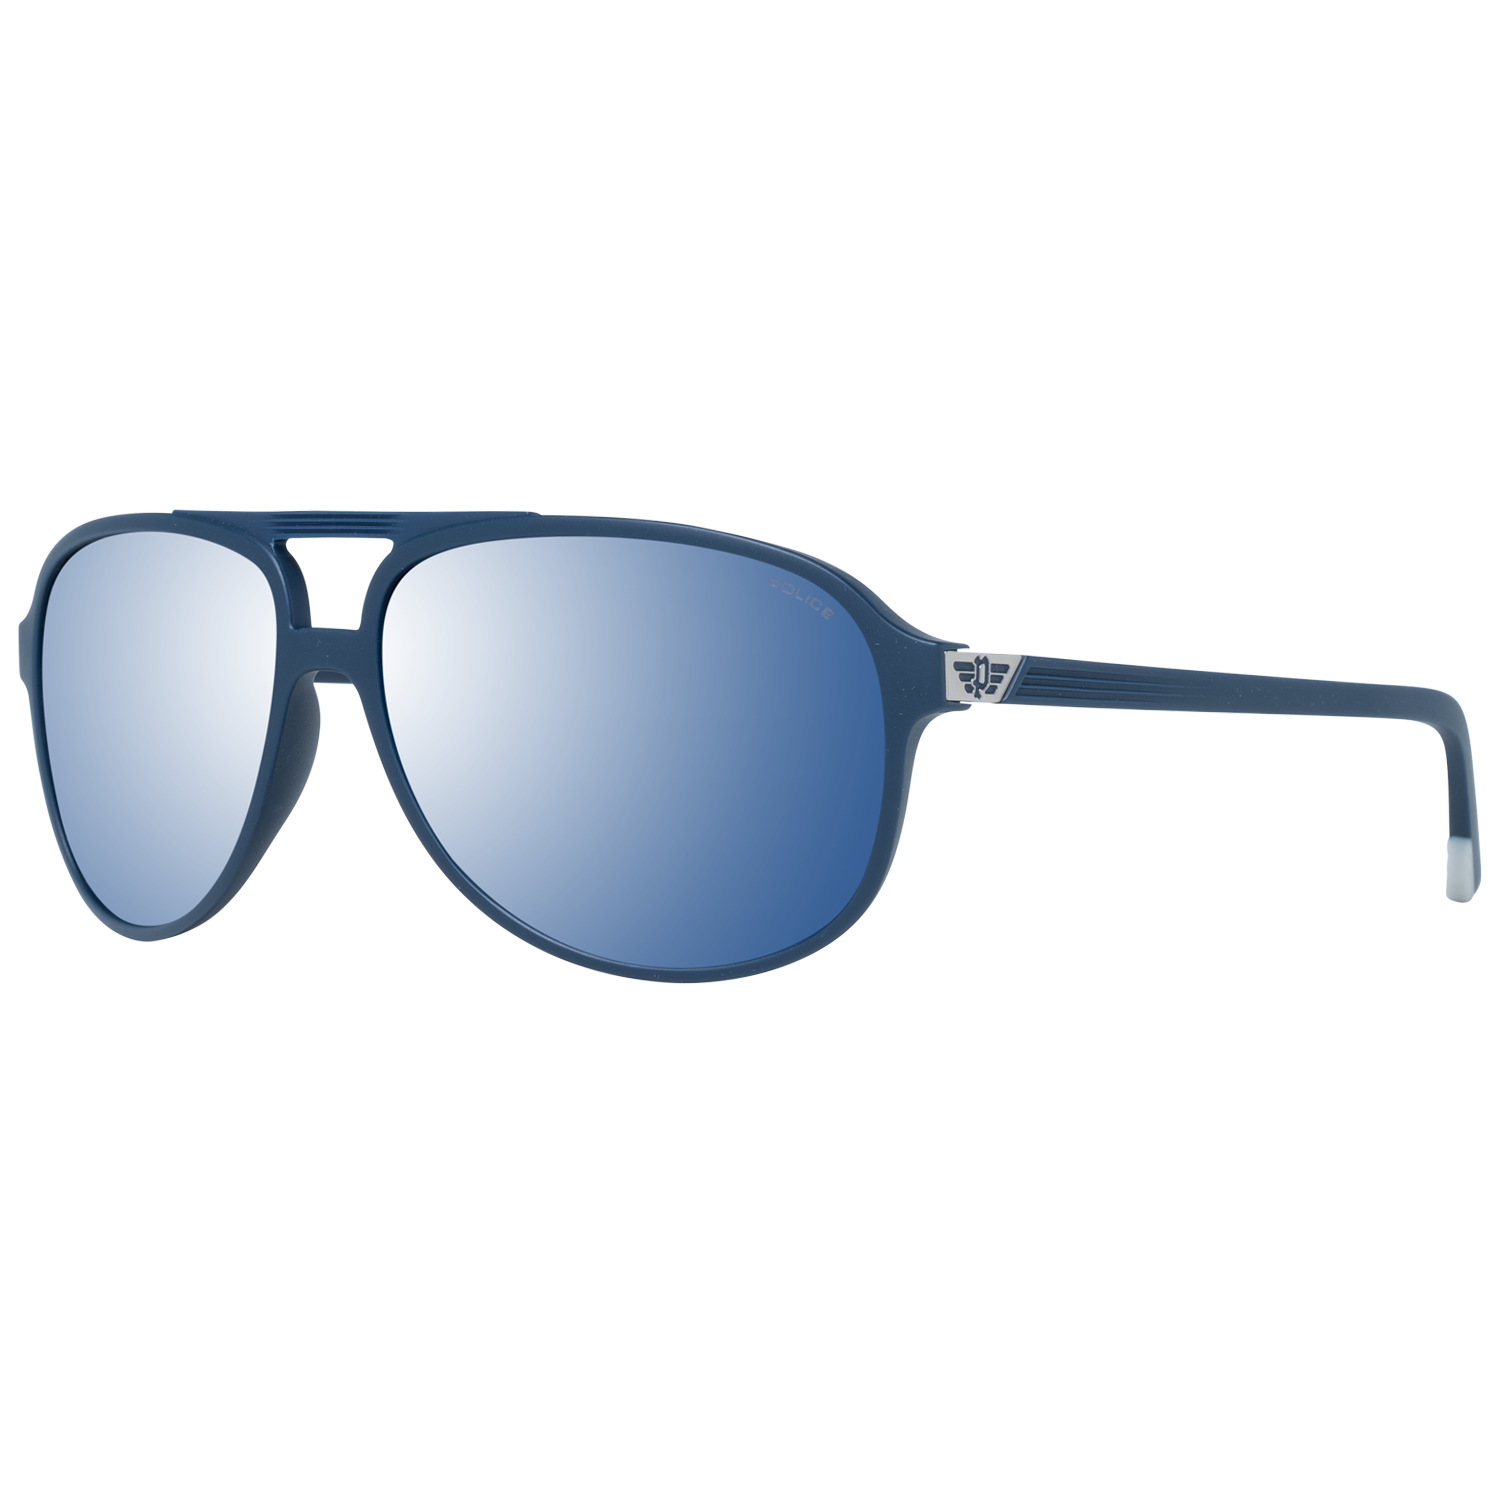 Police Sunglasses Police Sunglasses Men's SPL962 7SFB 60 Eyeglasses Eyewear UK USA Australia 